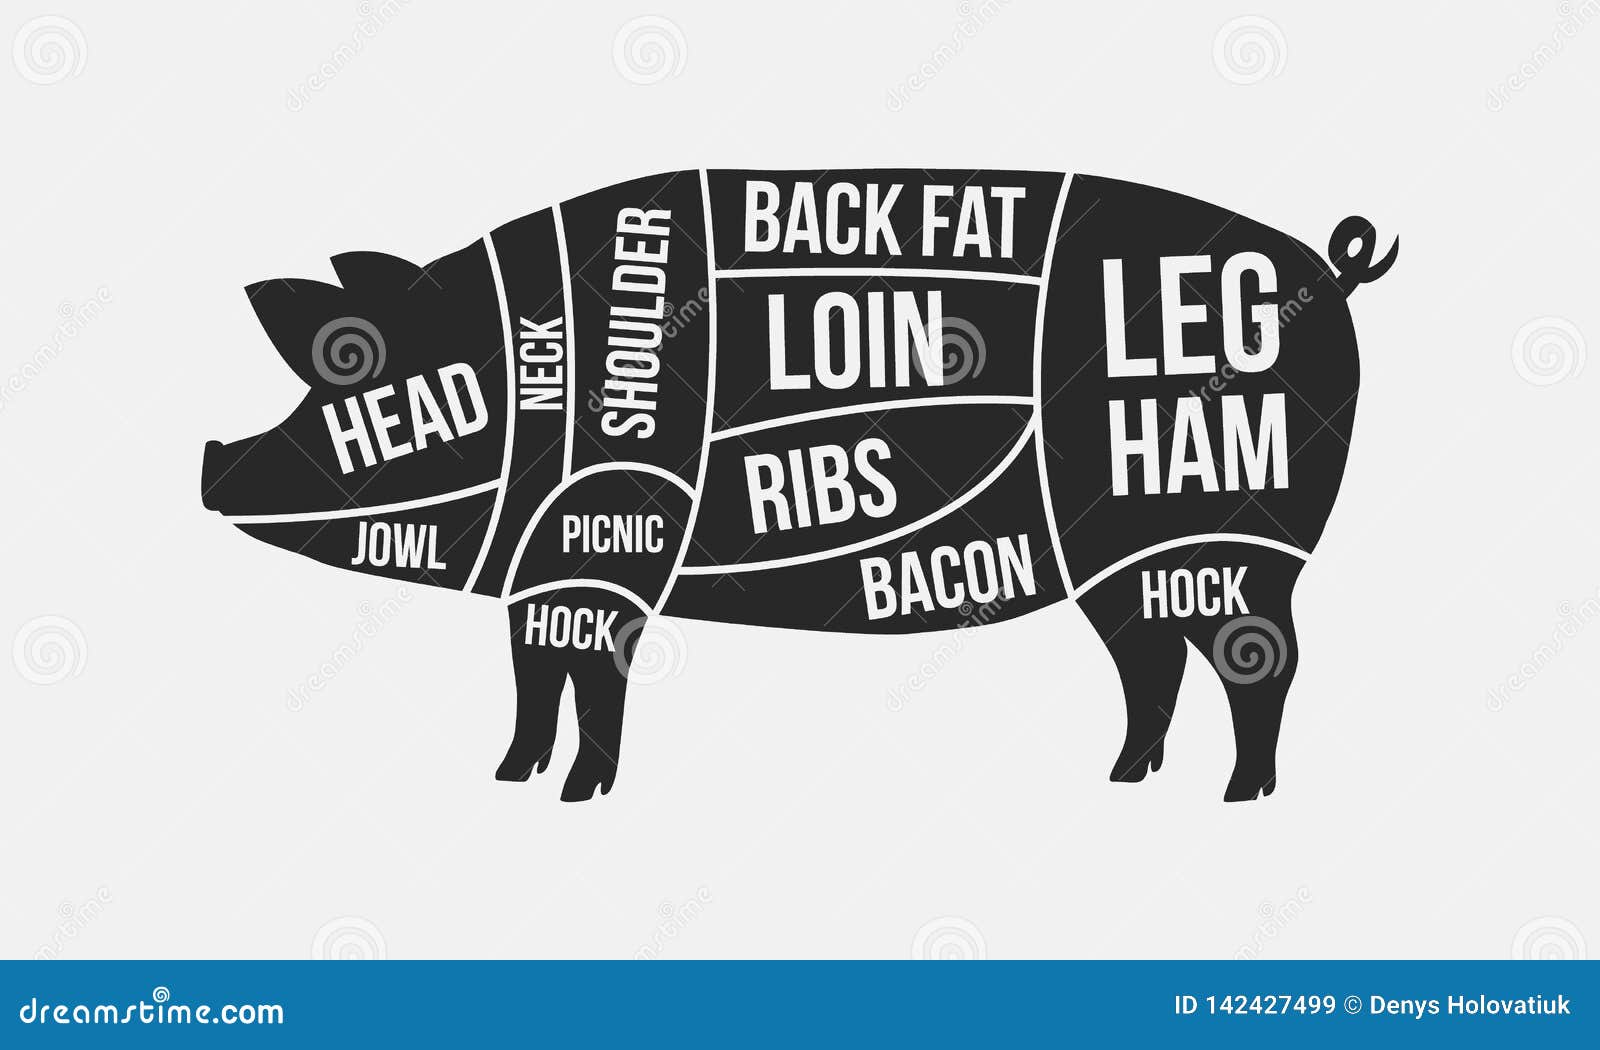 Pig Chart Meat Cuts